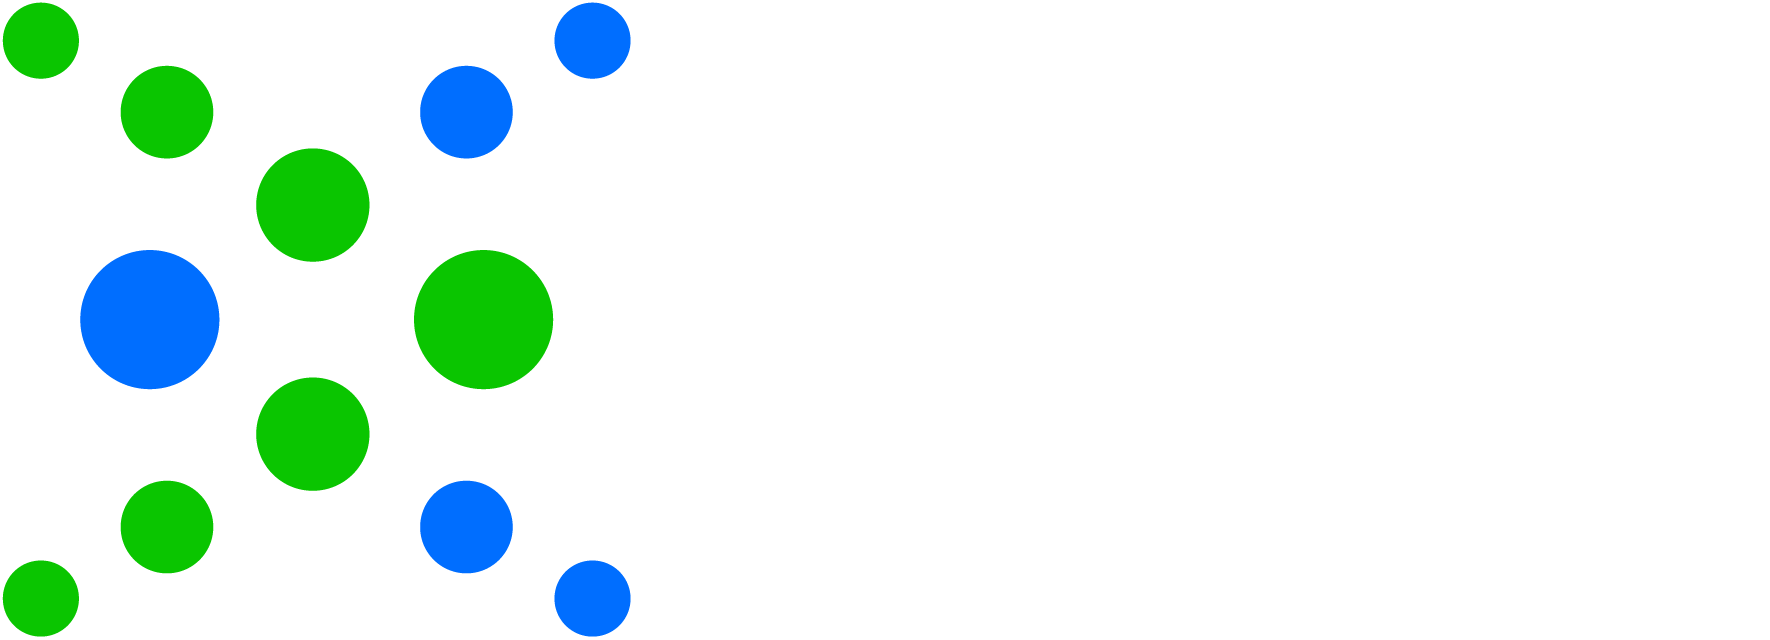 ACH Network logo